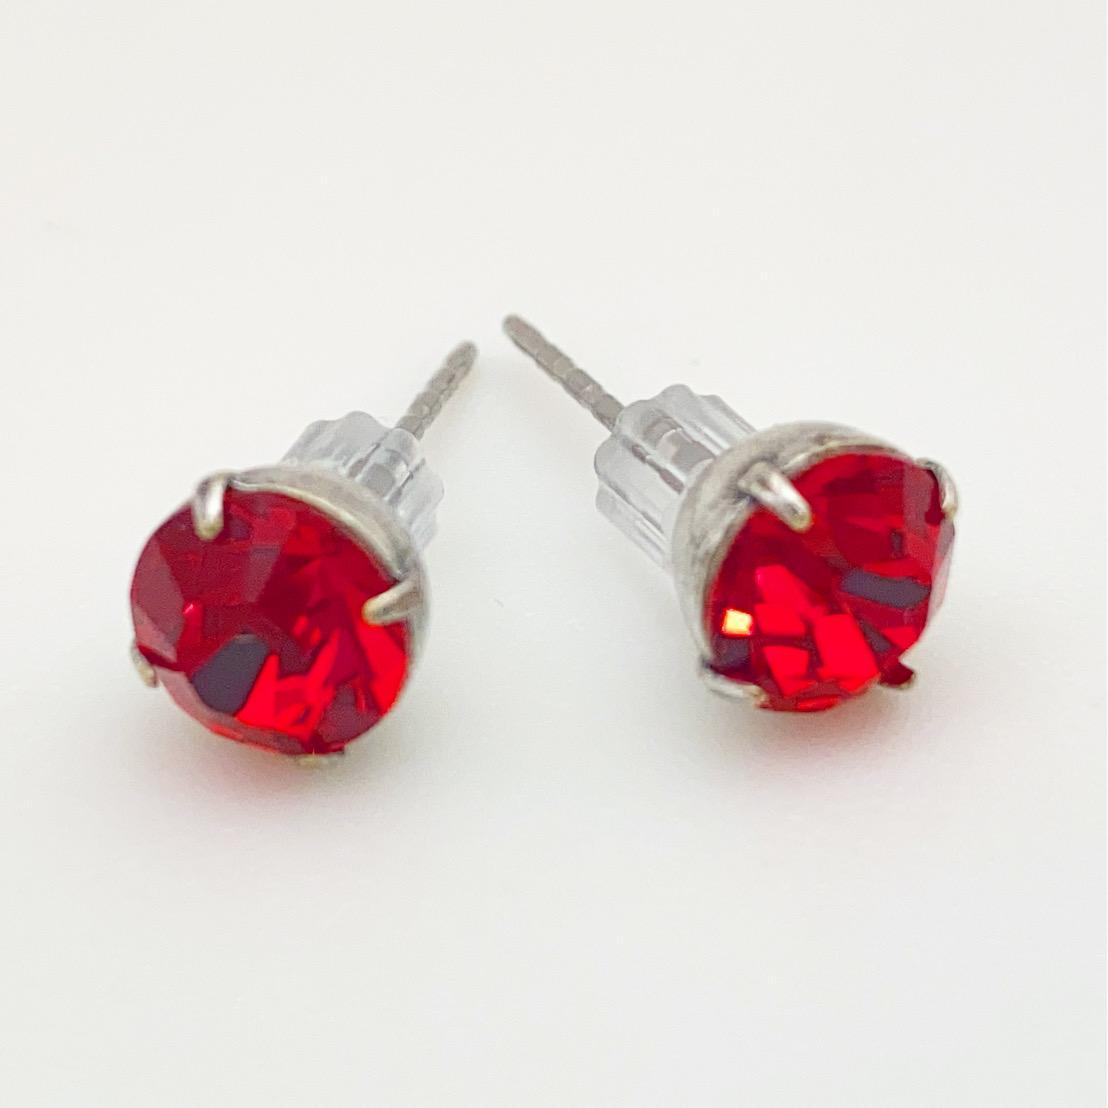 Stud Earrings - Real Crystals in Sterling Silver Bezel